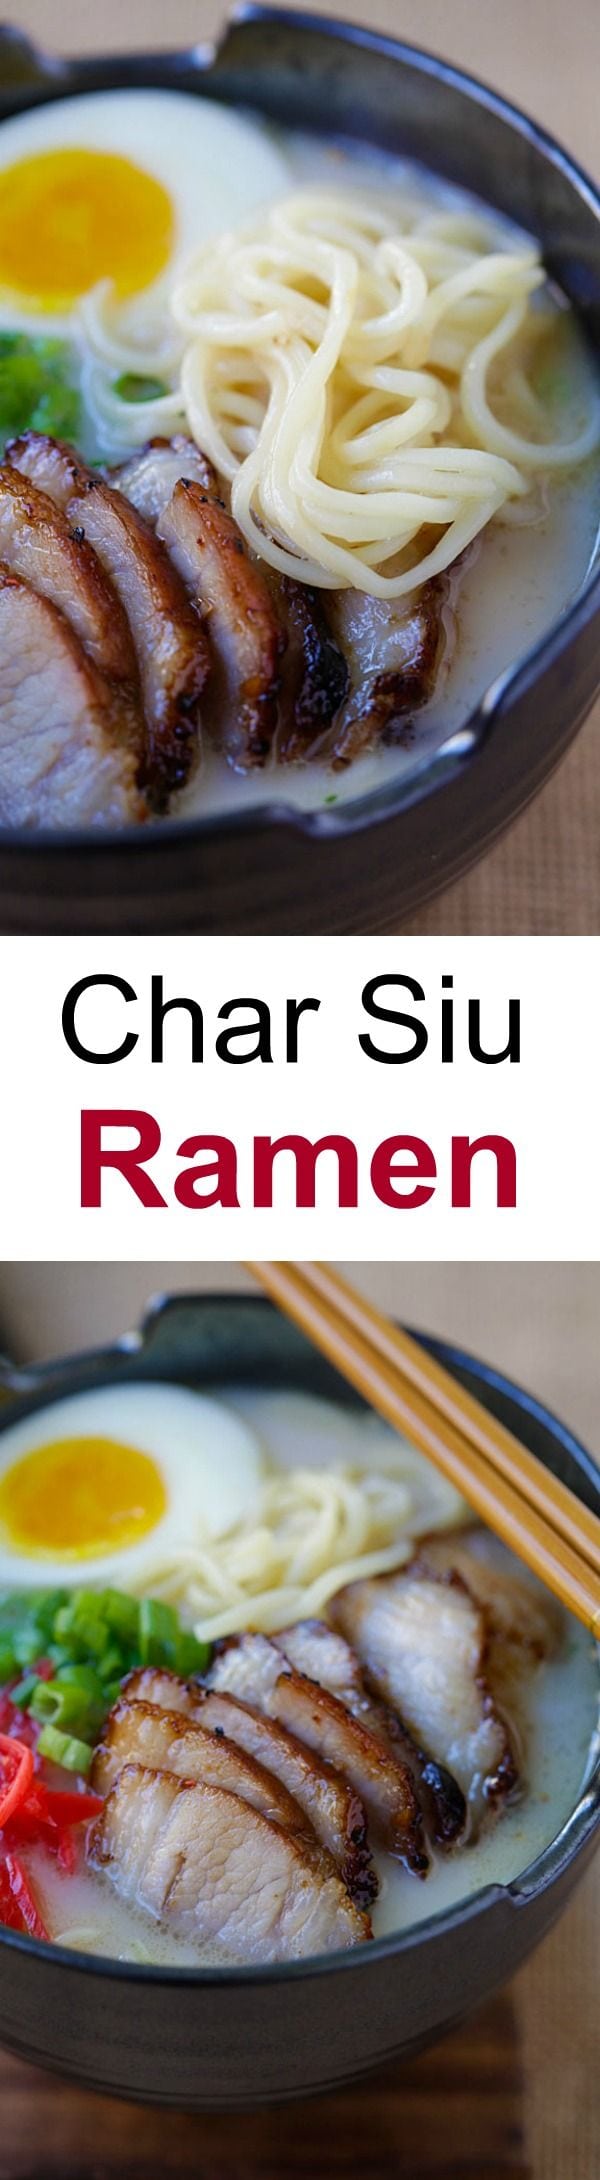 Char Siu Ramen – Amazing ramen topped with Chinese char siu roasted pork belly. Homemade ramen never tasted so good with Nissin RAOH ramen | rasamalaysia.com